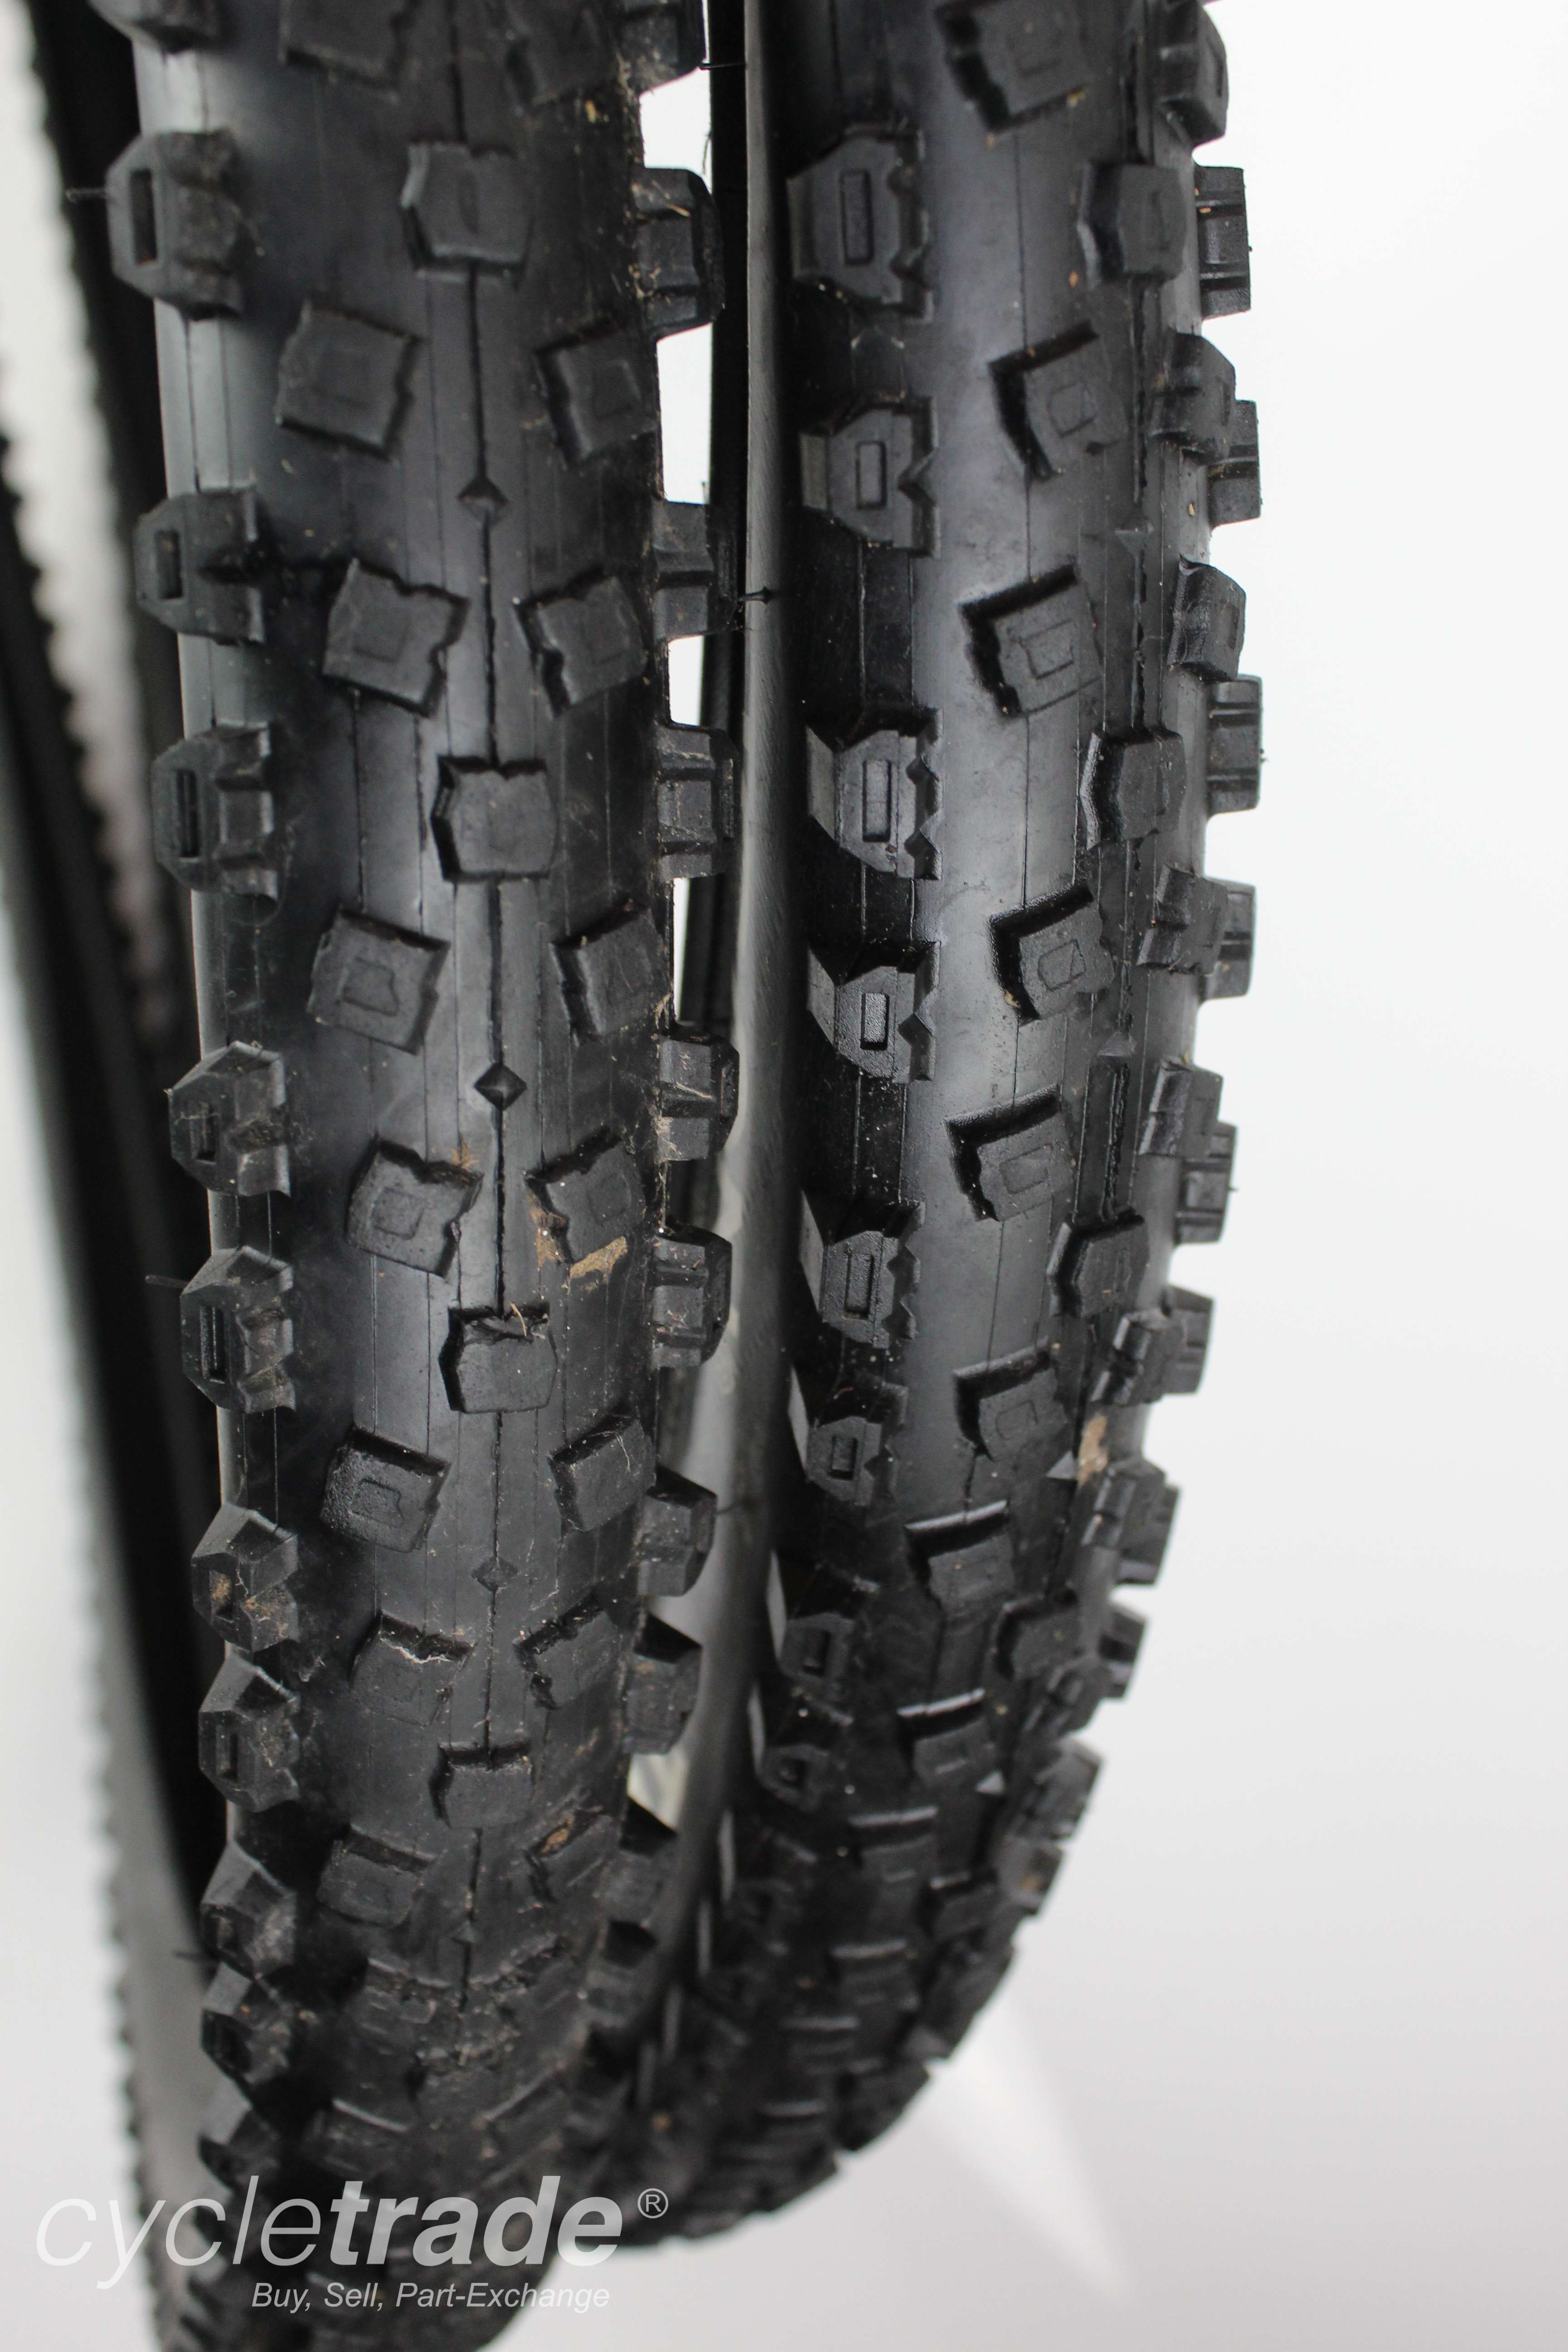 MTB Bike Tyres - 2 x Hutchinson Toro 29x2.10 Black Clincher - Grade B+